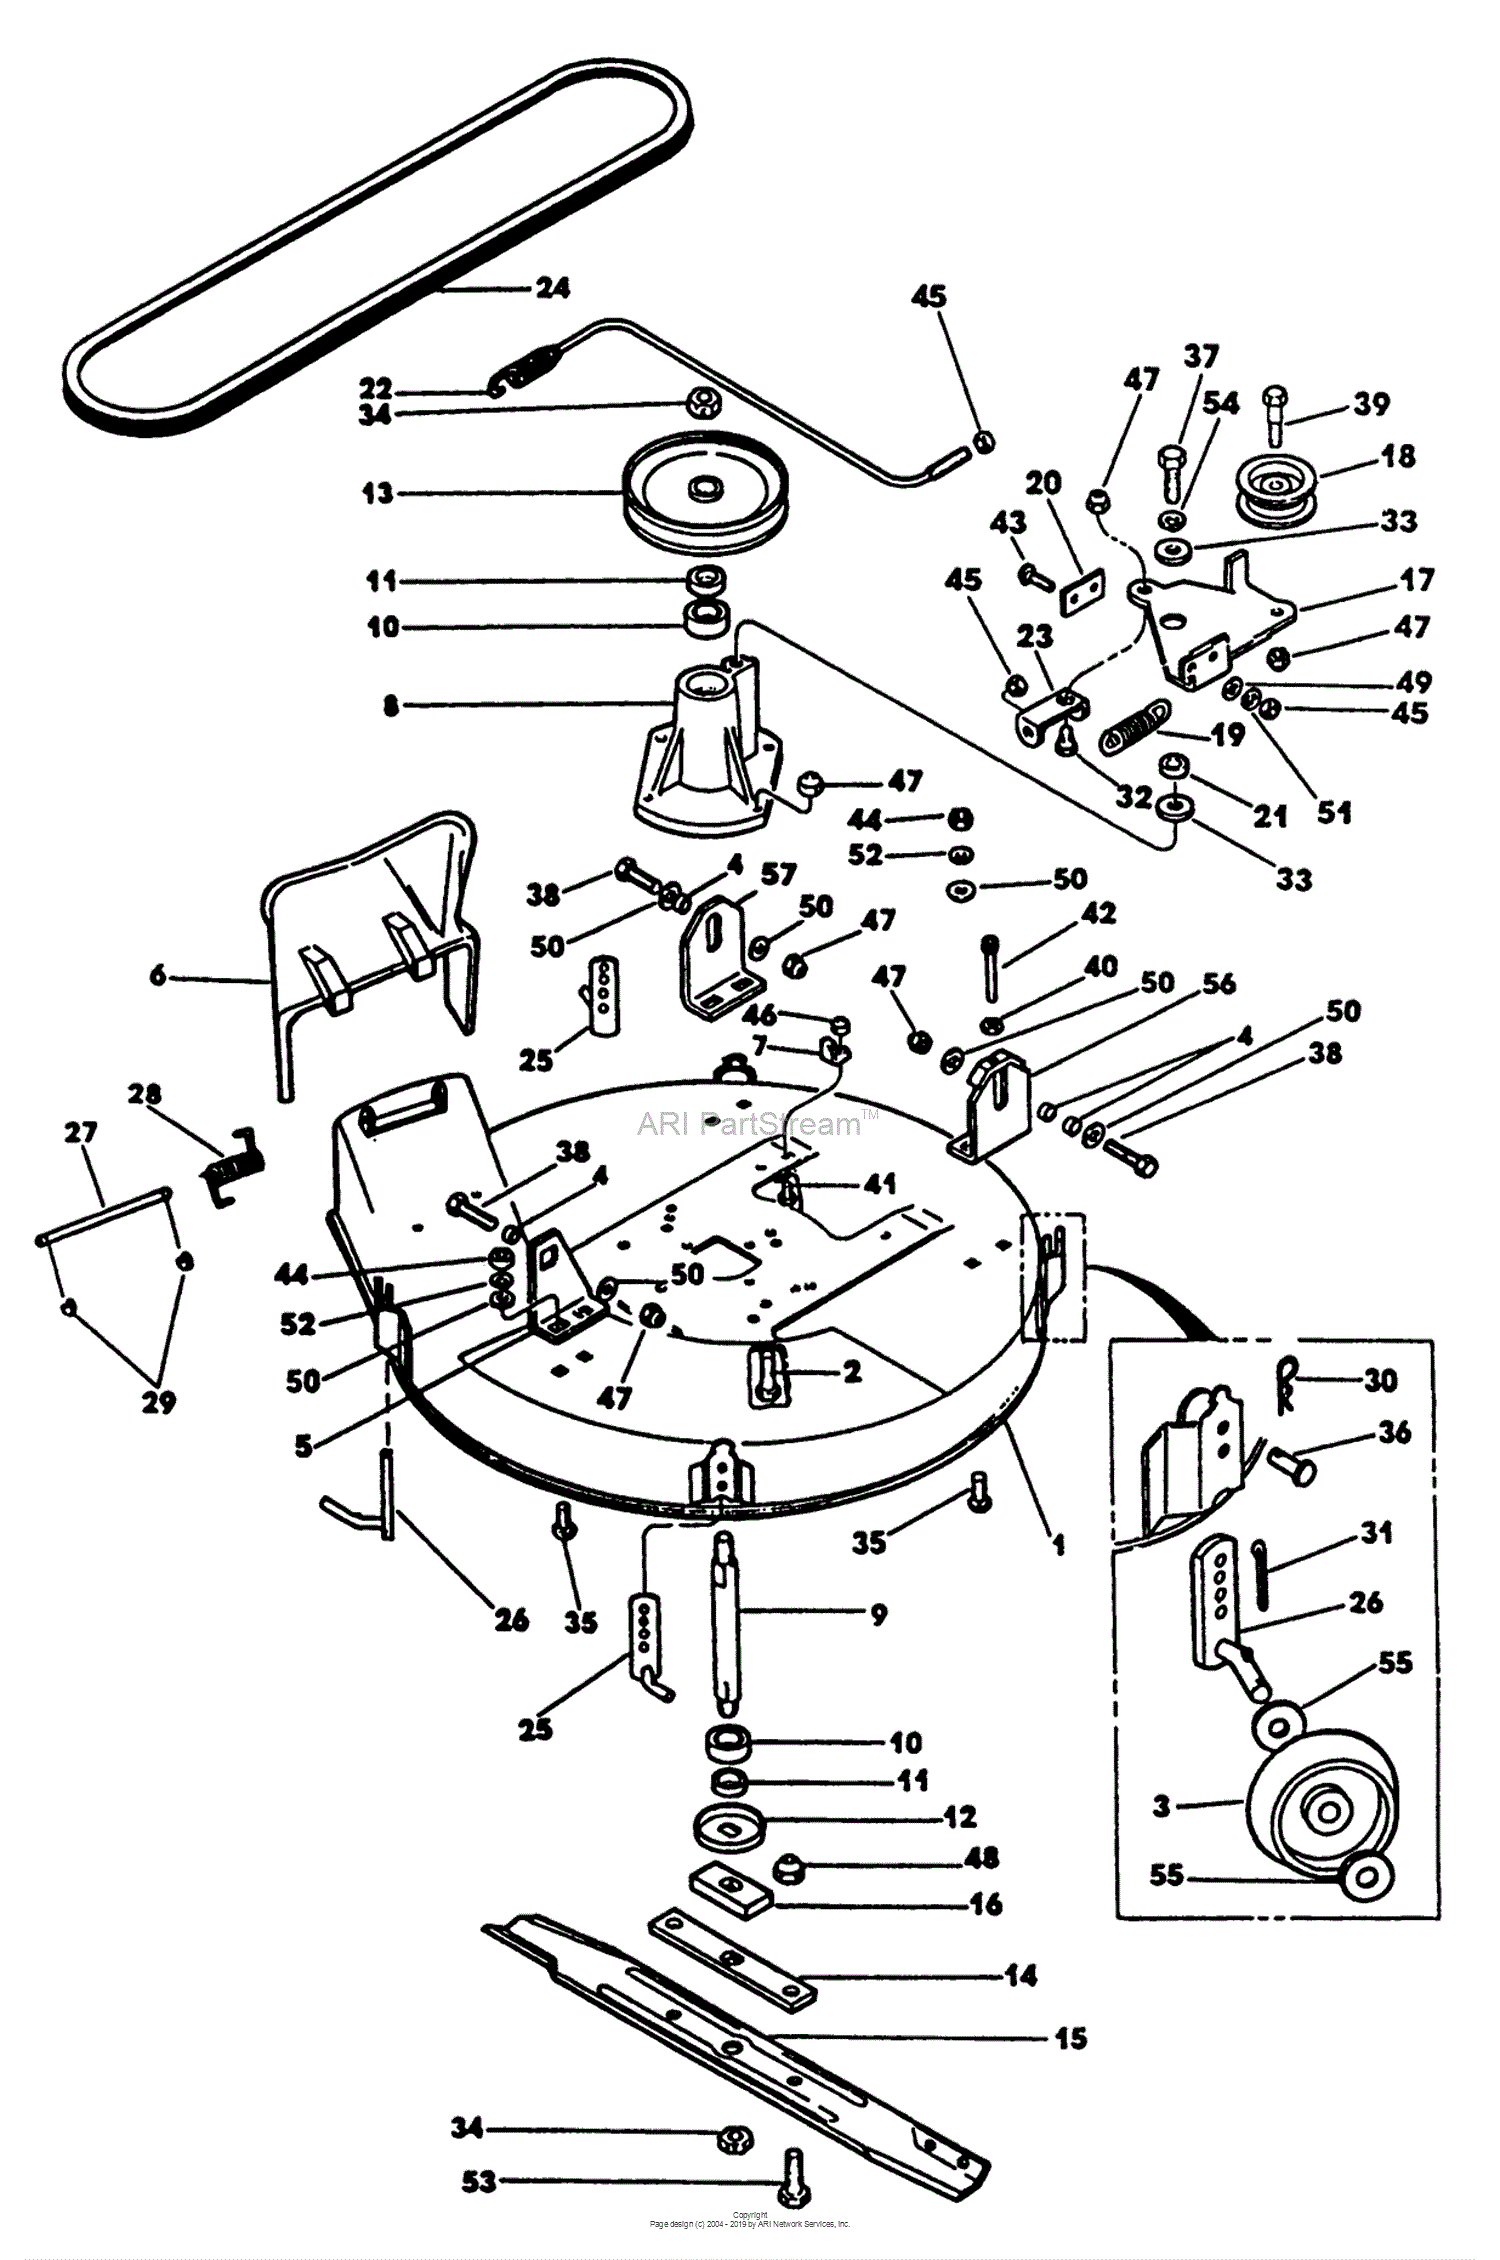 Diagram  Ford Yt16 Wiring Diagram Full Version Hd Quality